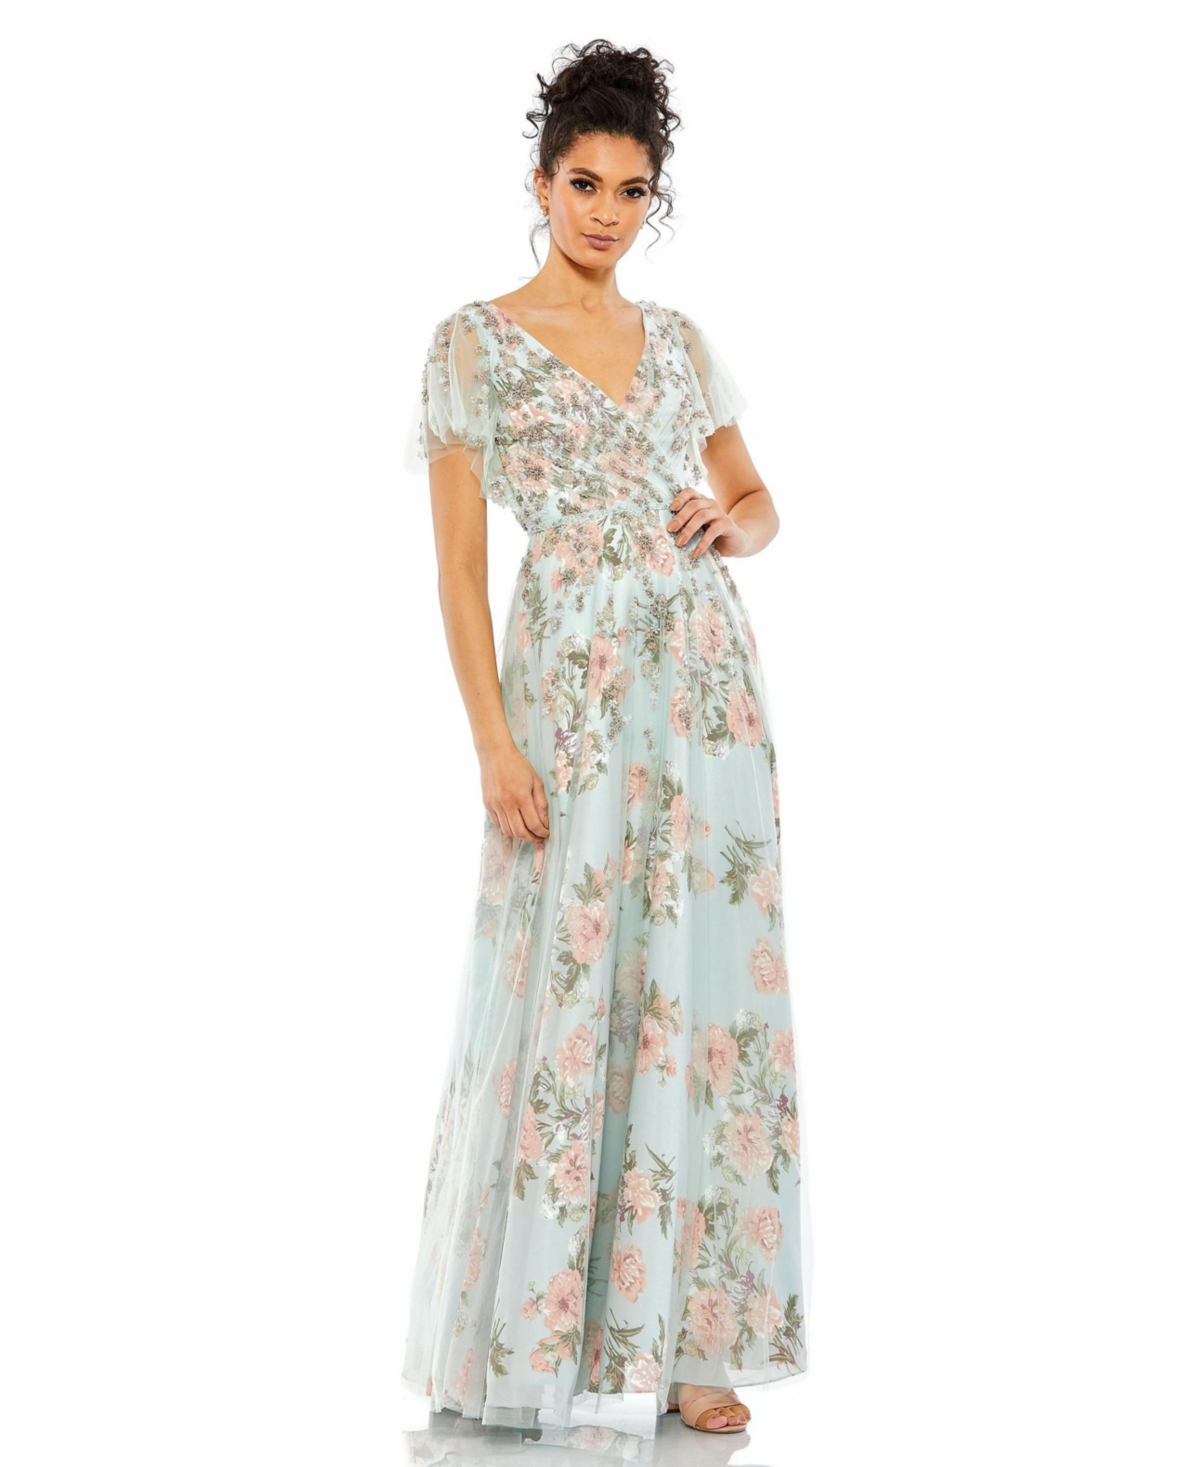 Best 1920s Prom Dresses – Great Gatsby Style Gowns Womens Floral Flutter Sleeve V-Neck Maxi Dress - Blue multi $458.00 AT vintagedancer.com